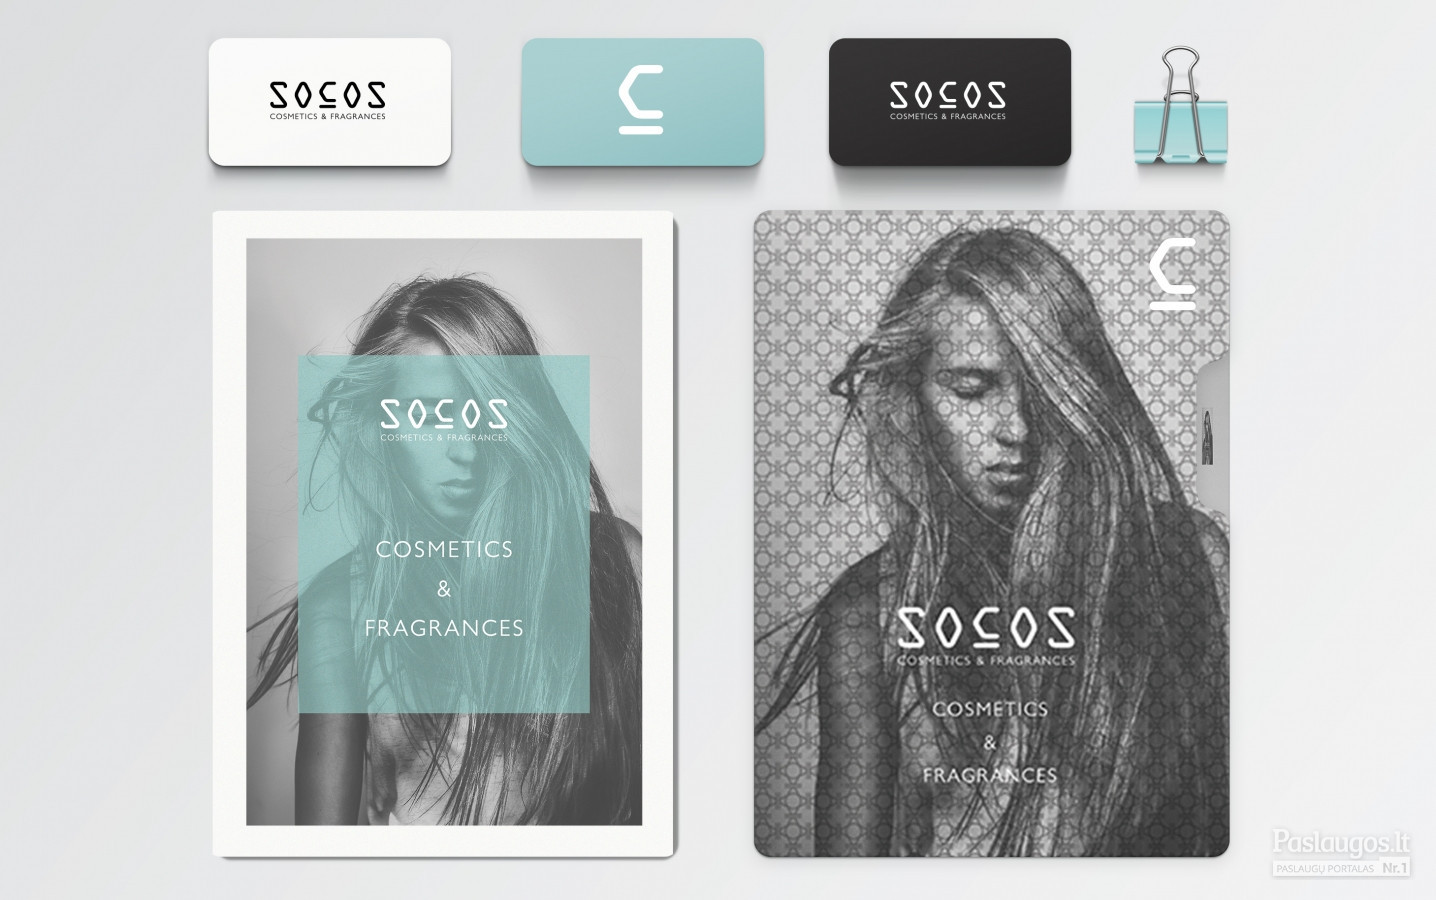 SOCOS (SOVOS grupės dalis/Cosmetics & Fragrances) firminis stilius

Photographer: Greta Bernotaitė
Model: Indrė Kausylaitė